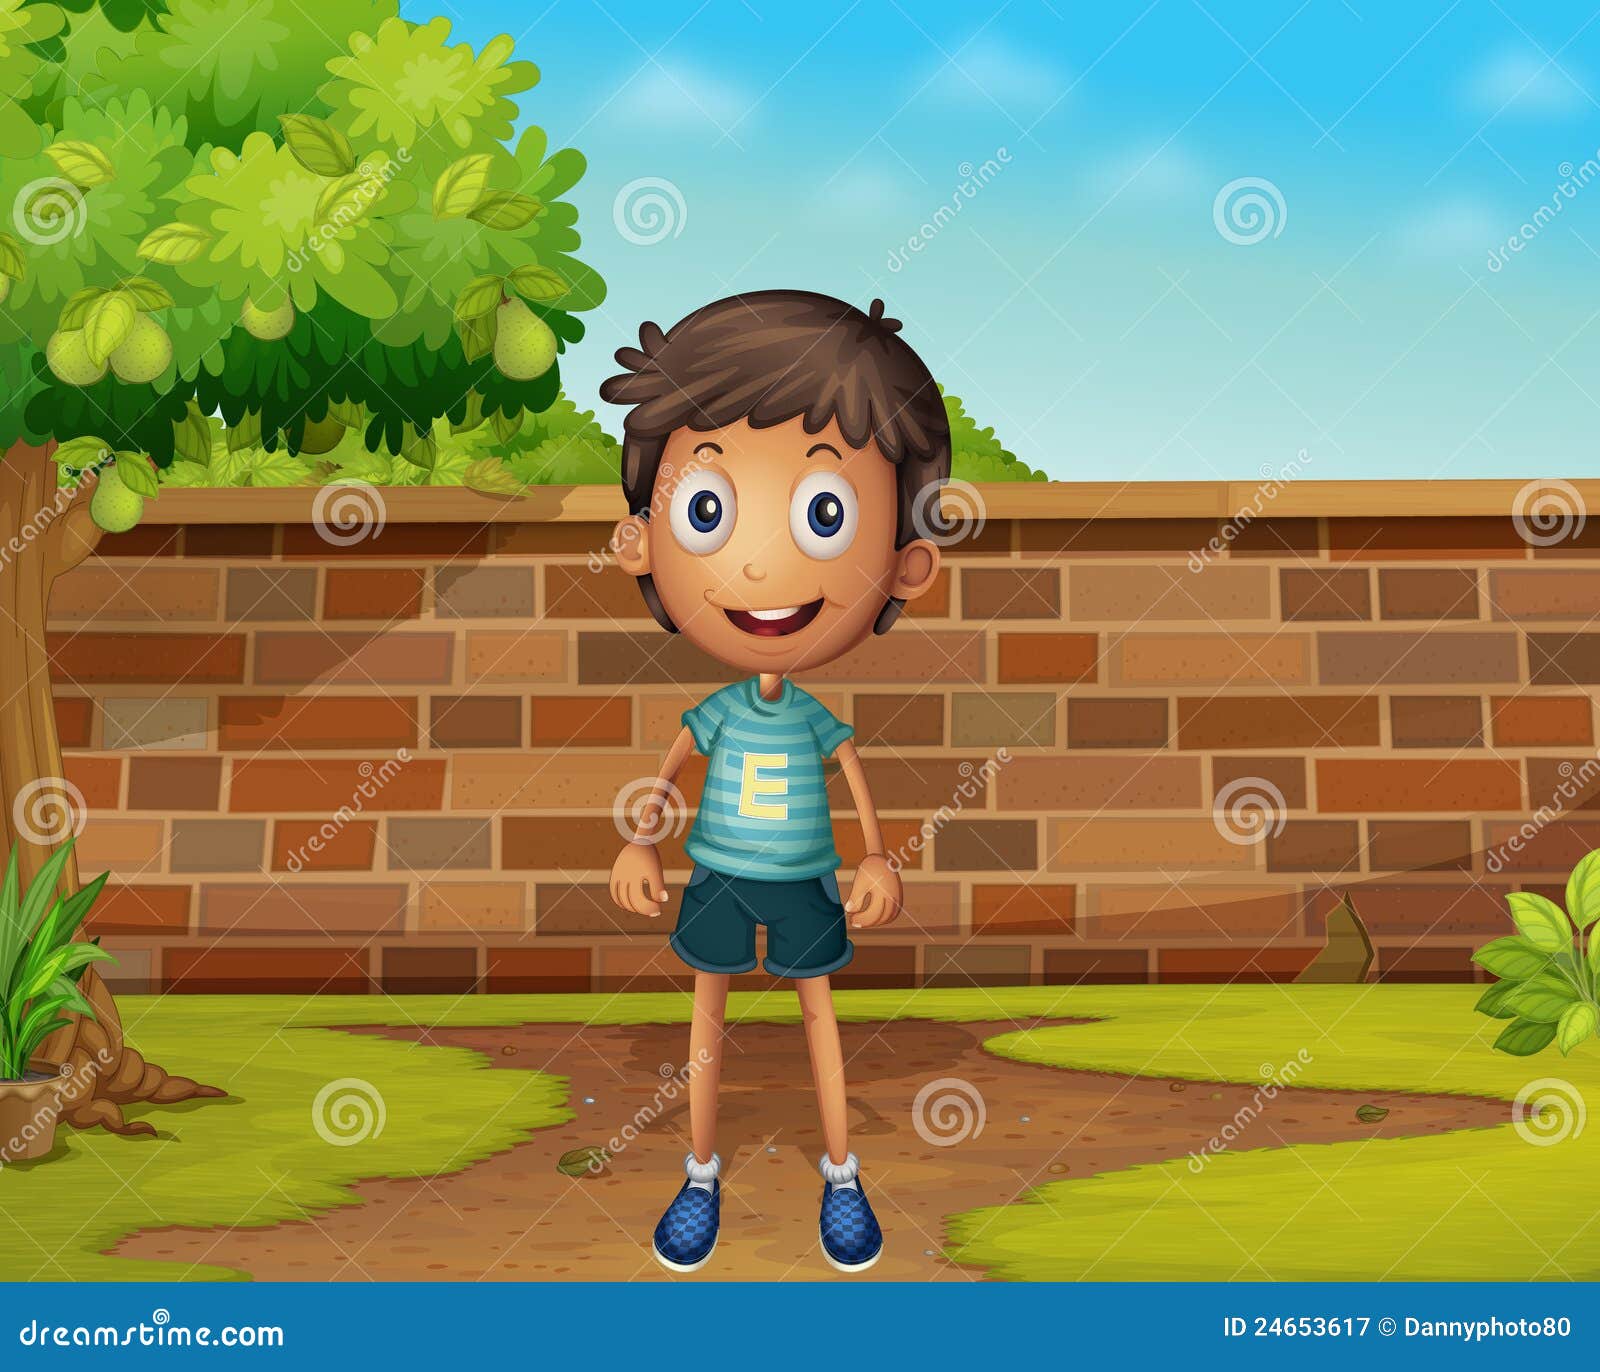 Boy Standing In The Yard Stock Vector Illustration Of Cartoon 24653617